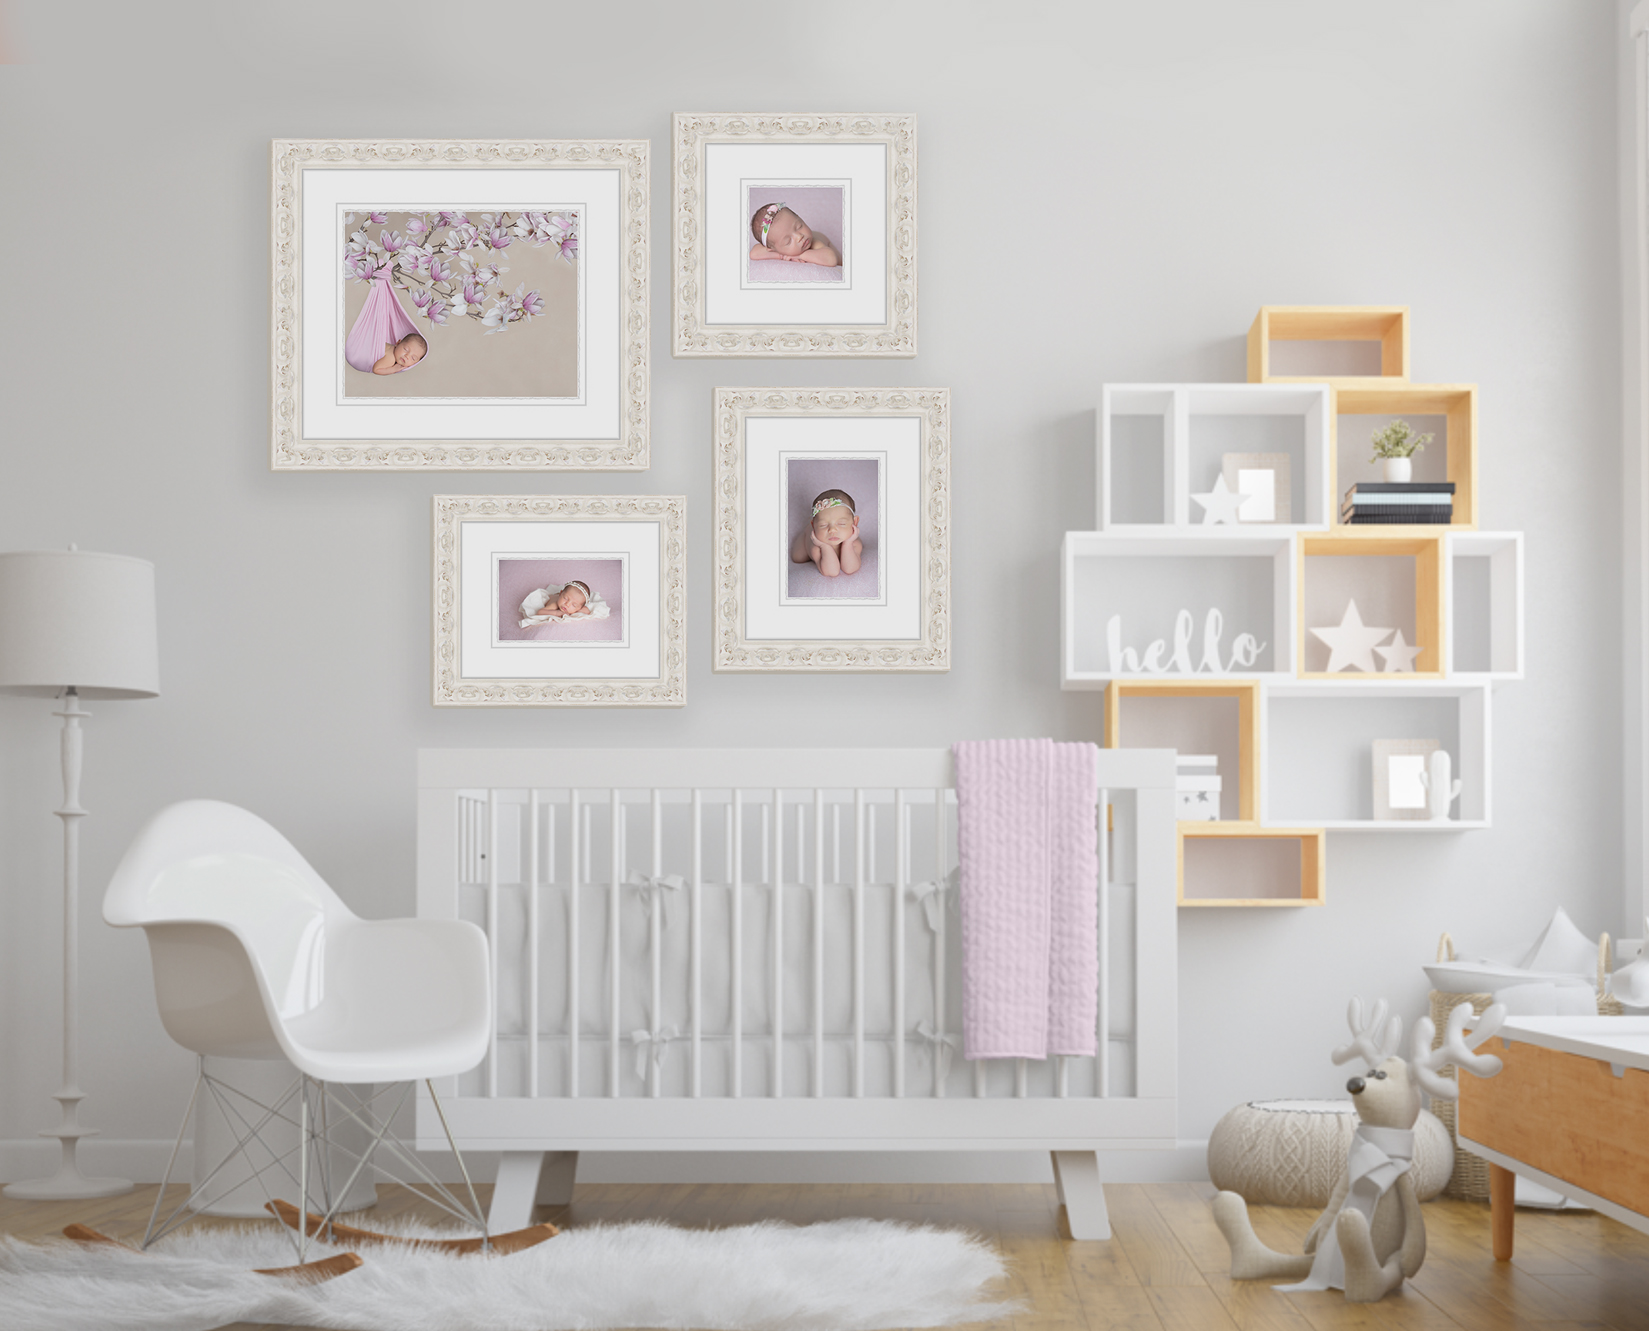 Nursery room shows 4 newborn wall art prints